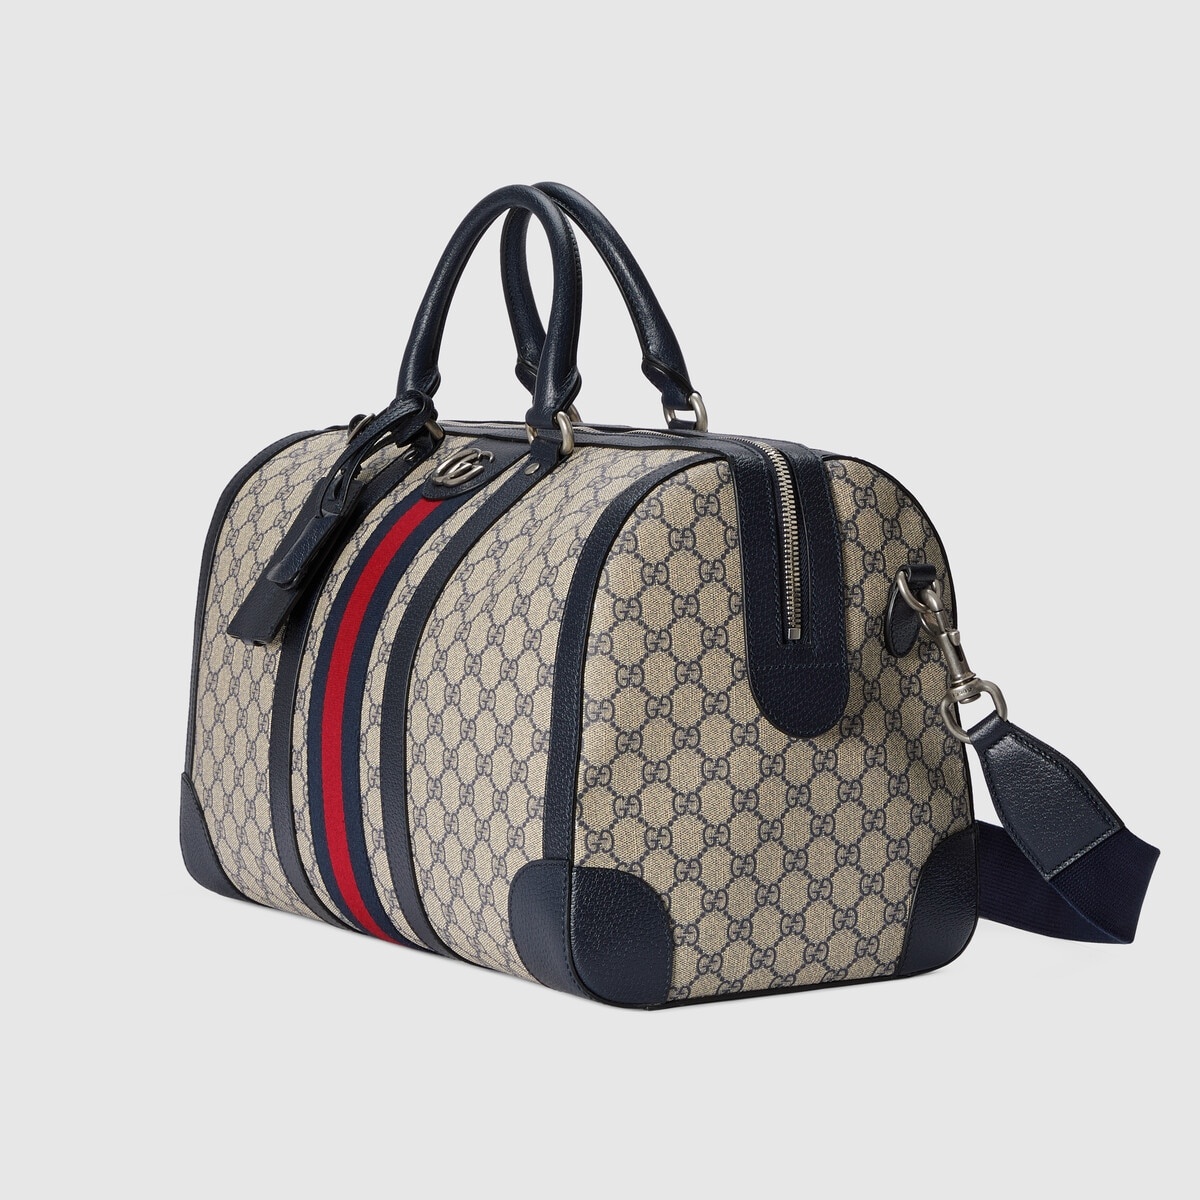 Gucci Savoy small duffle bag - 2